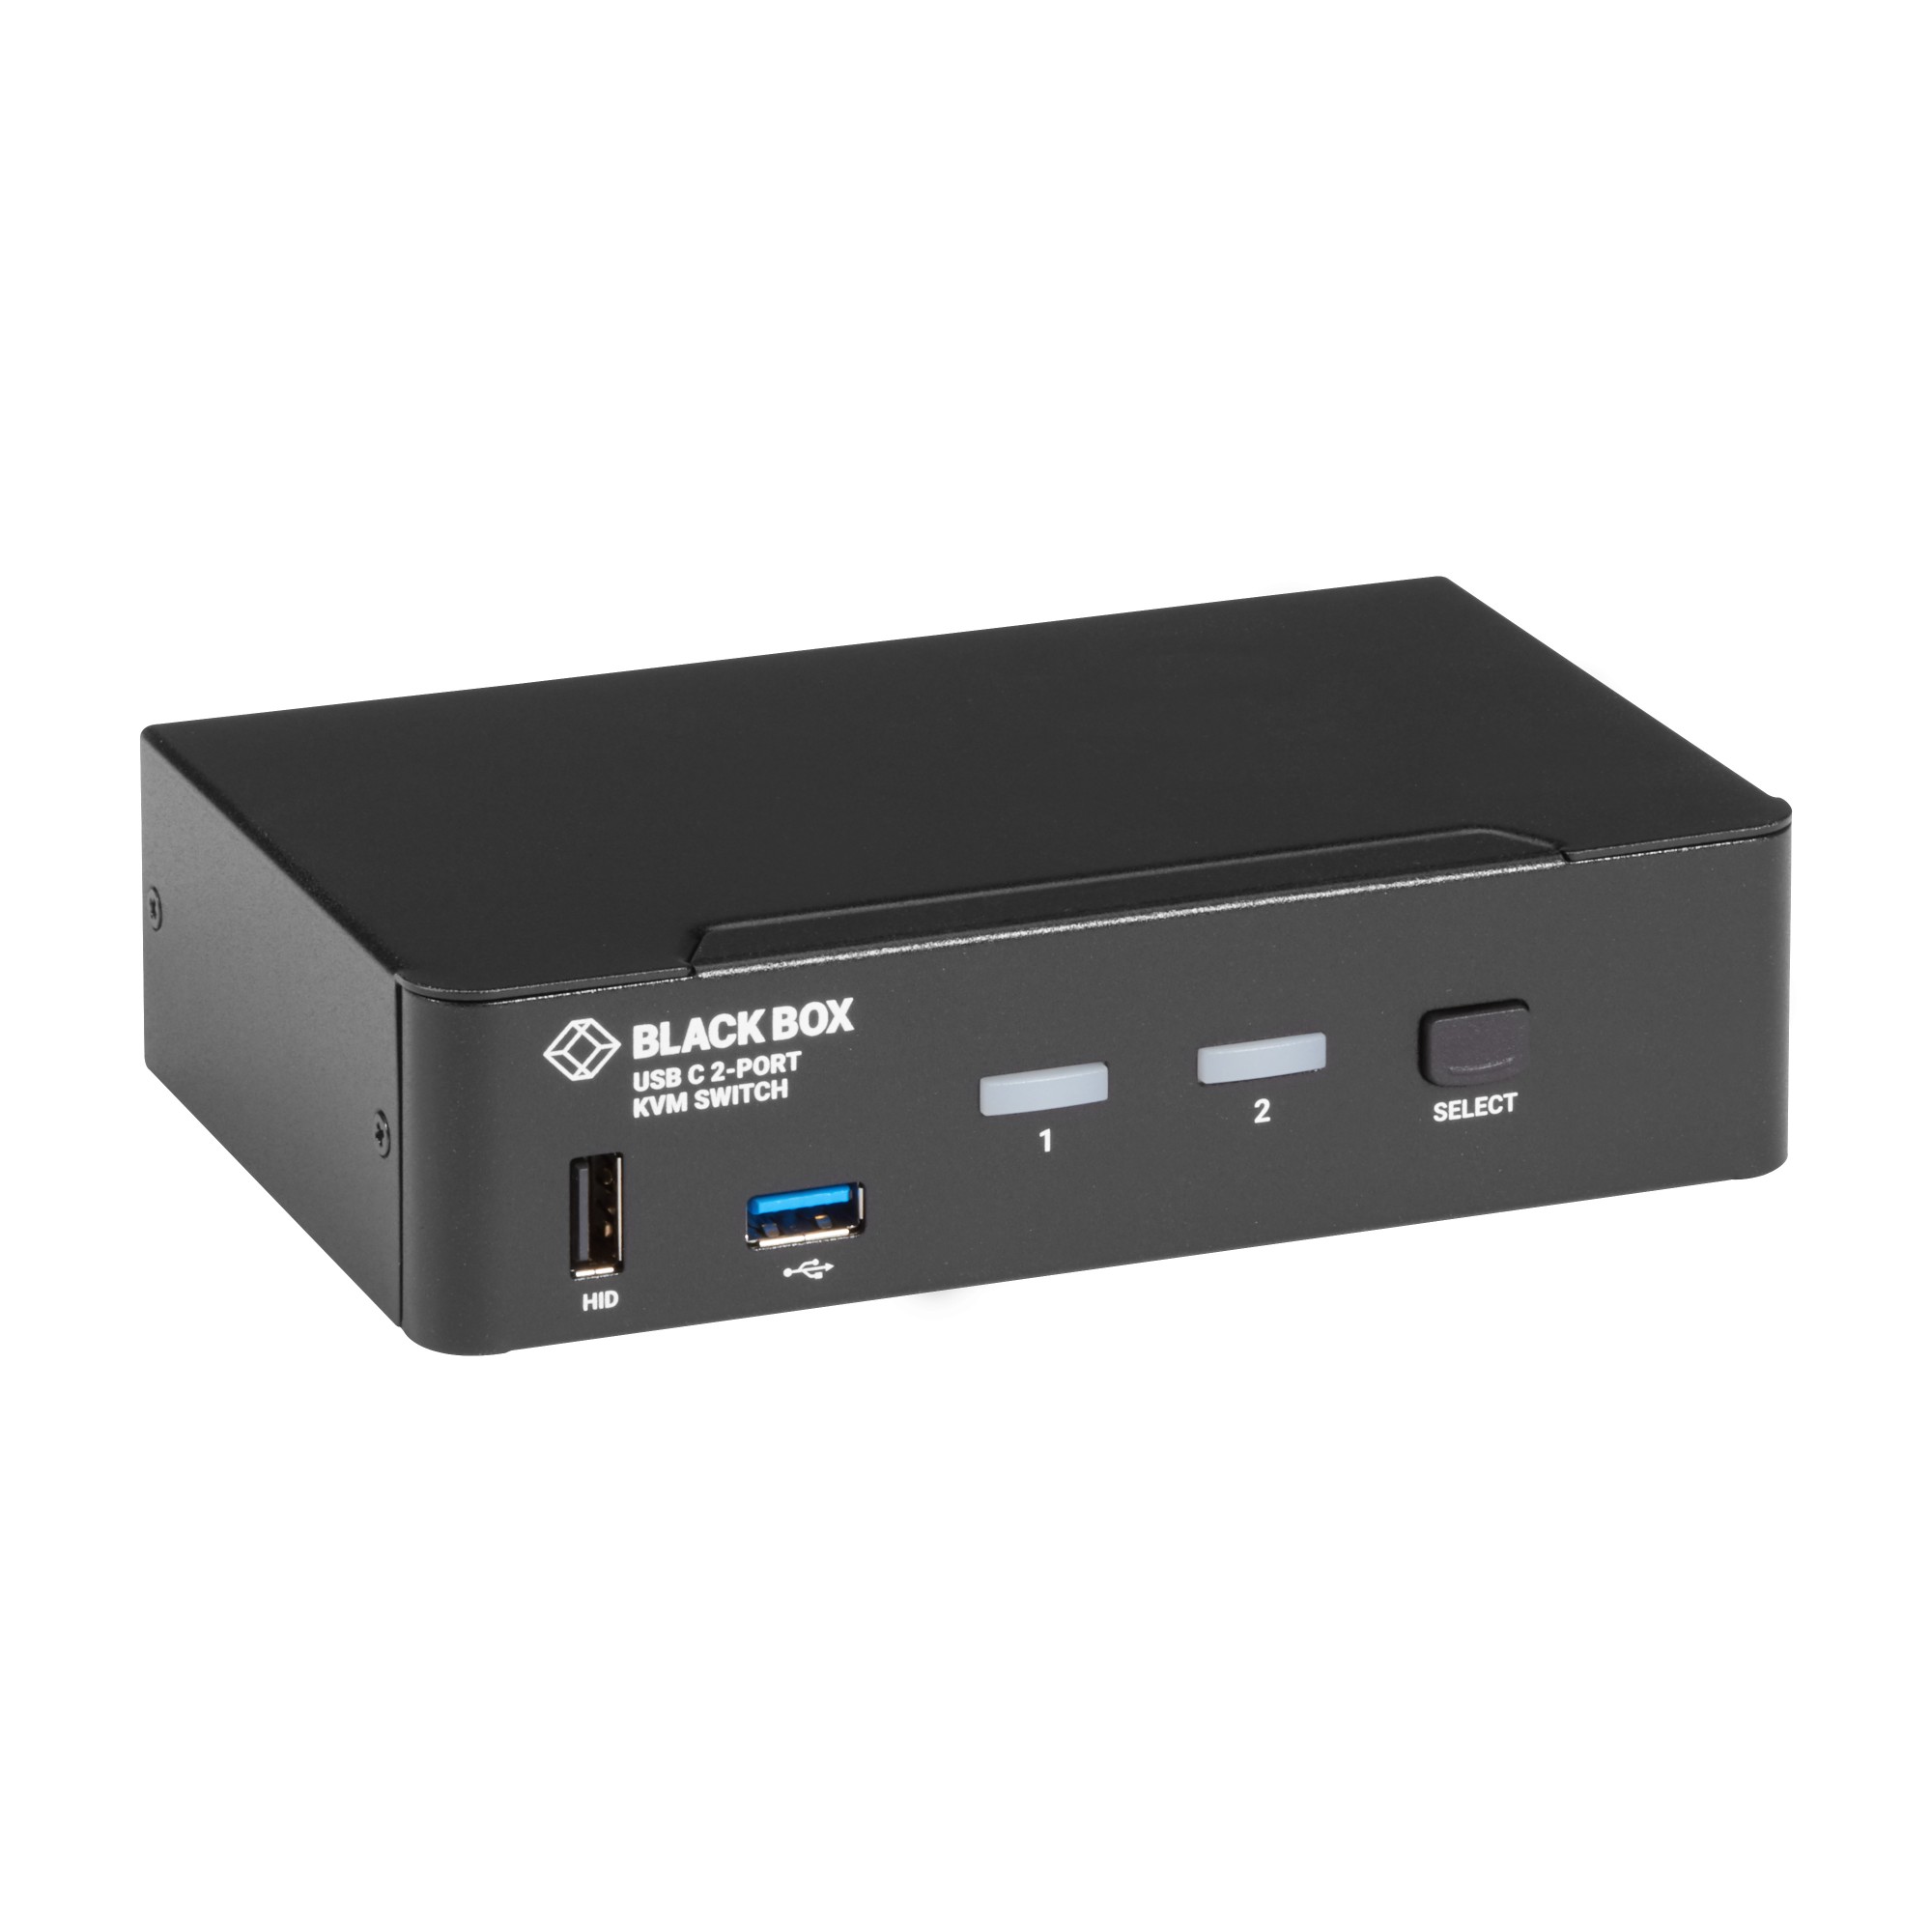 Black Box USB-C 4K 2-PORT KVM switch